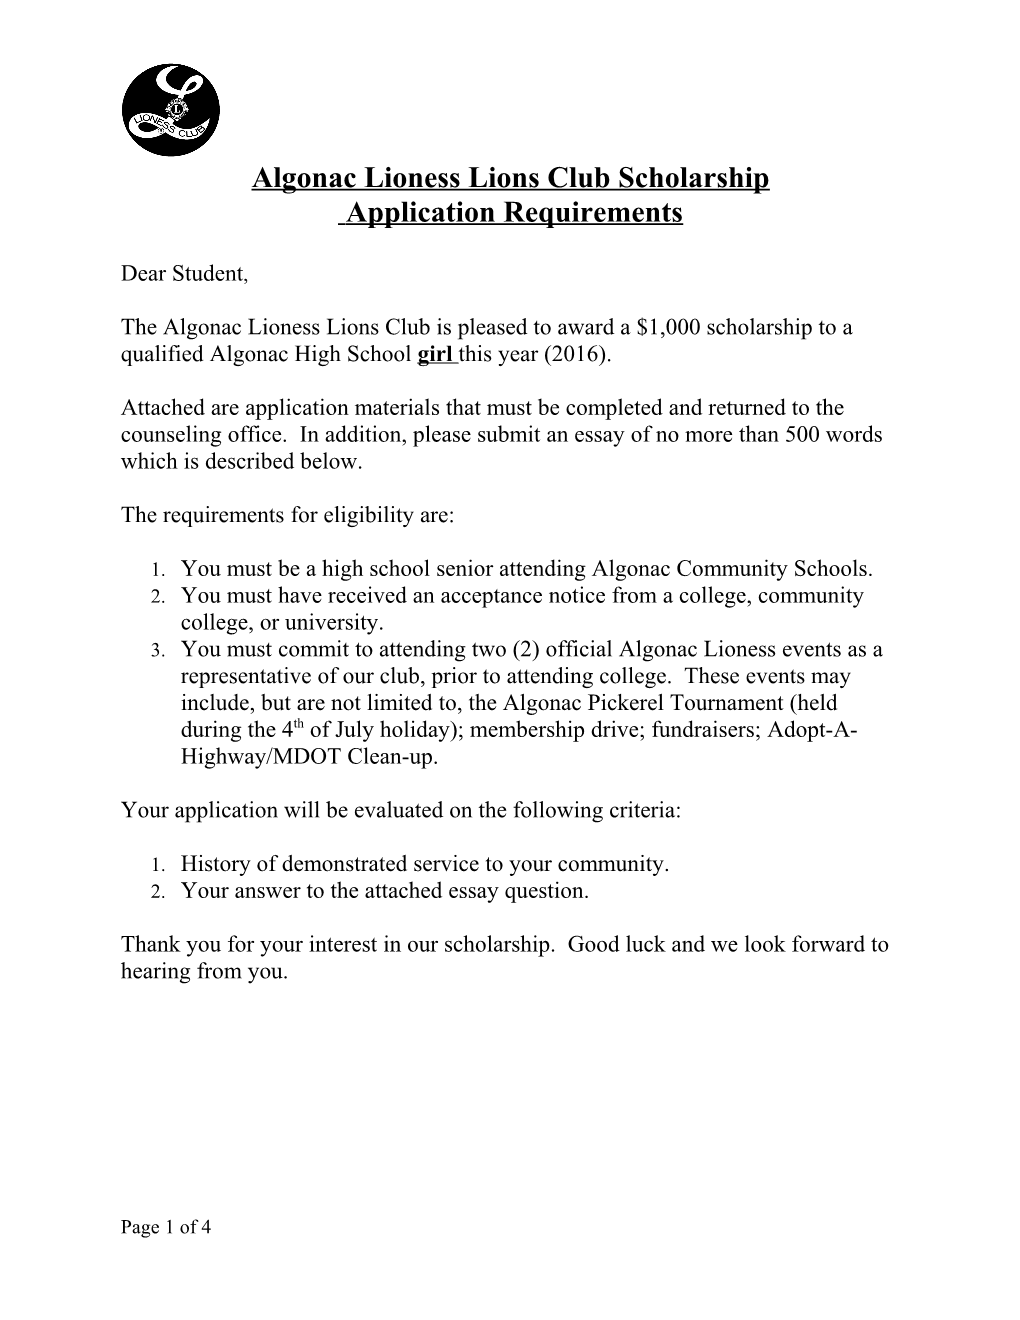 Algonac Lioness Lions Club Scholarship Application